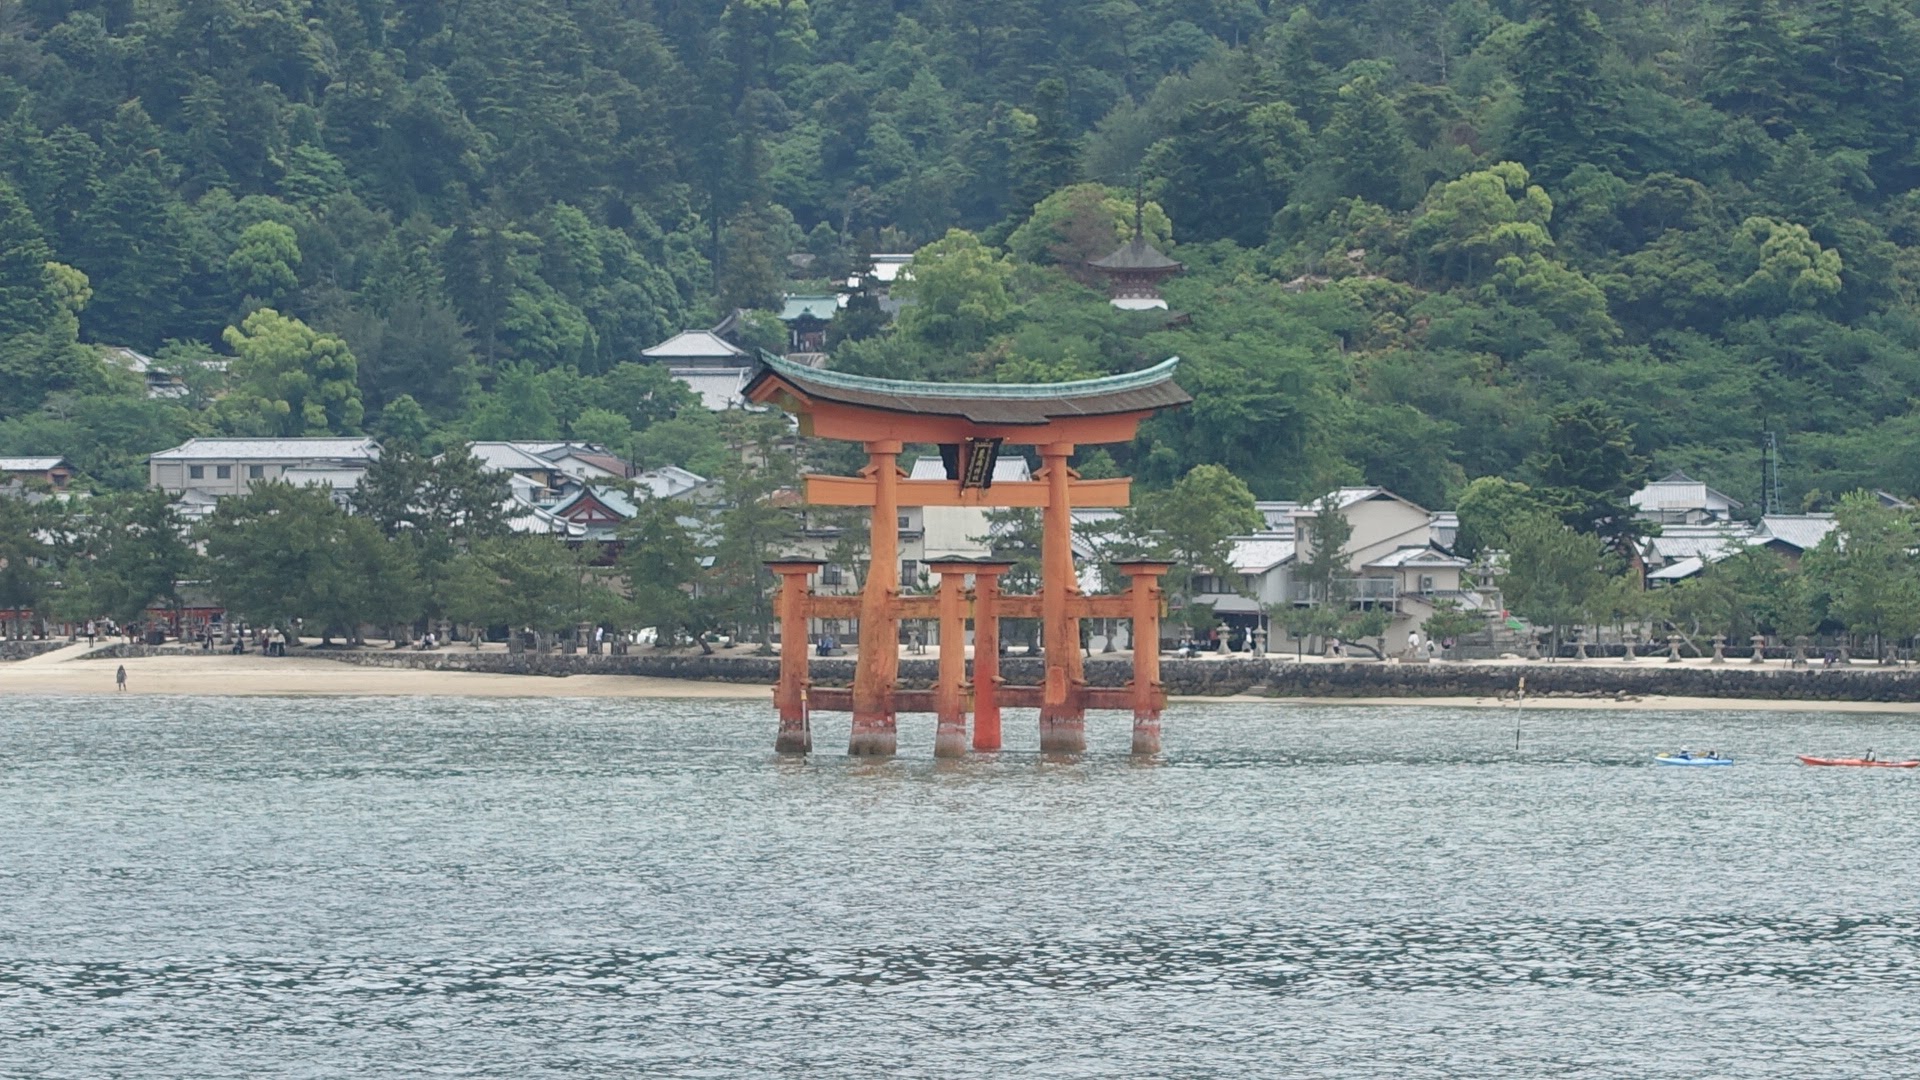 Itsukushima torii gate